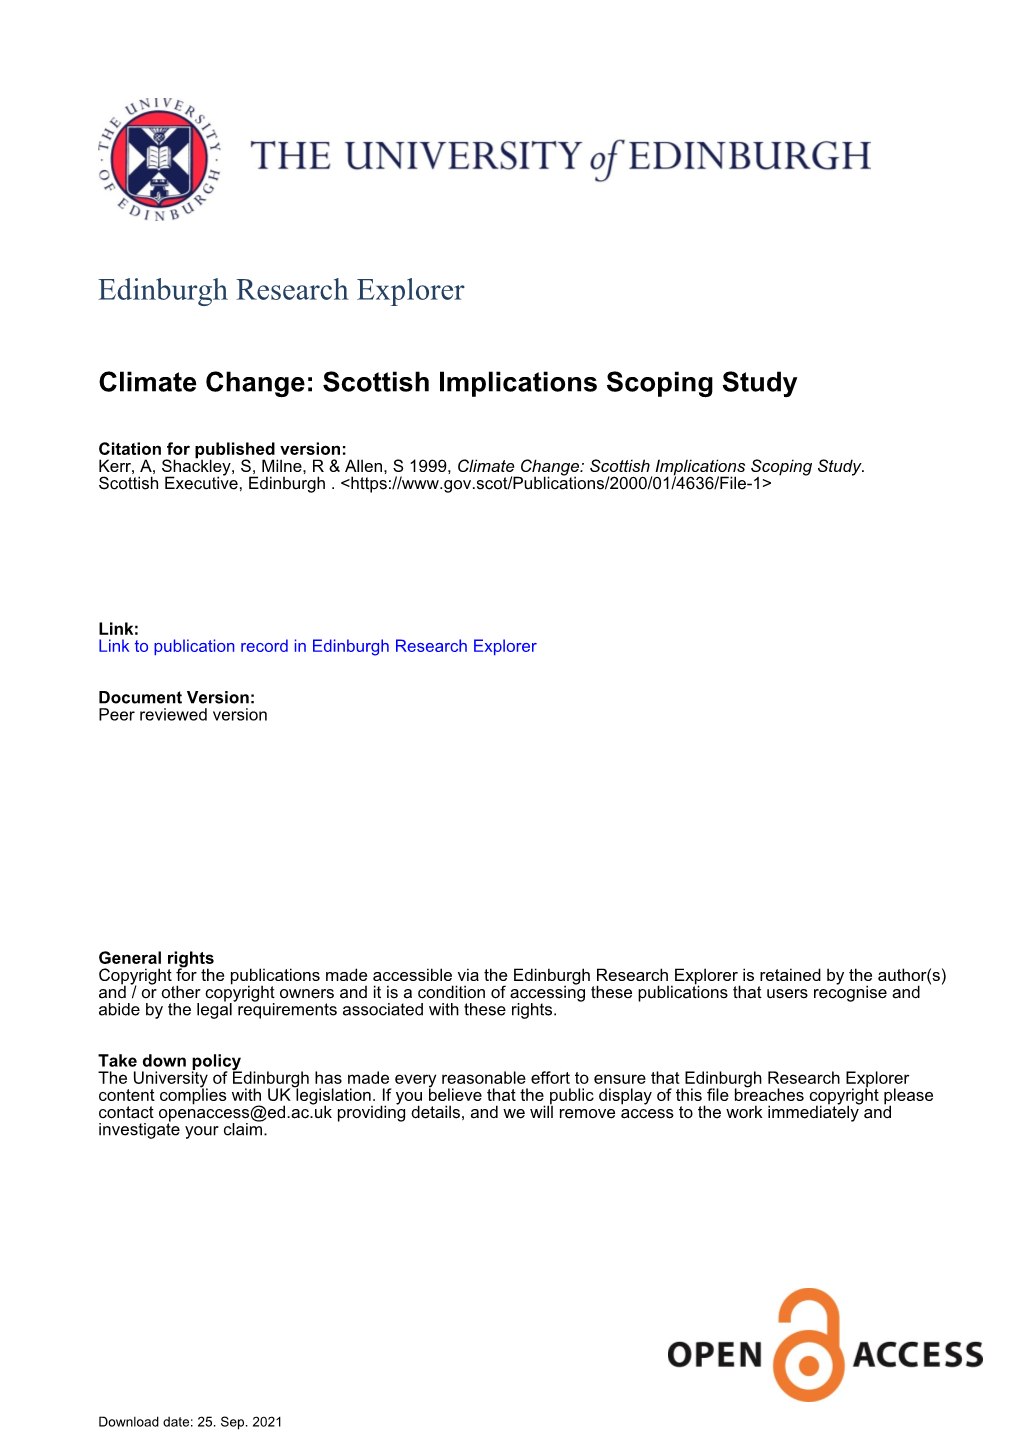 Climate Change: Scottish Implications Scoping Study